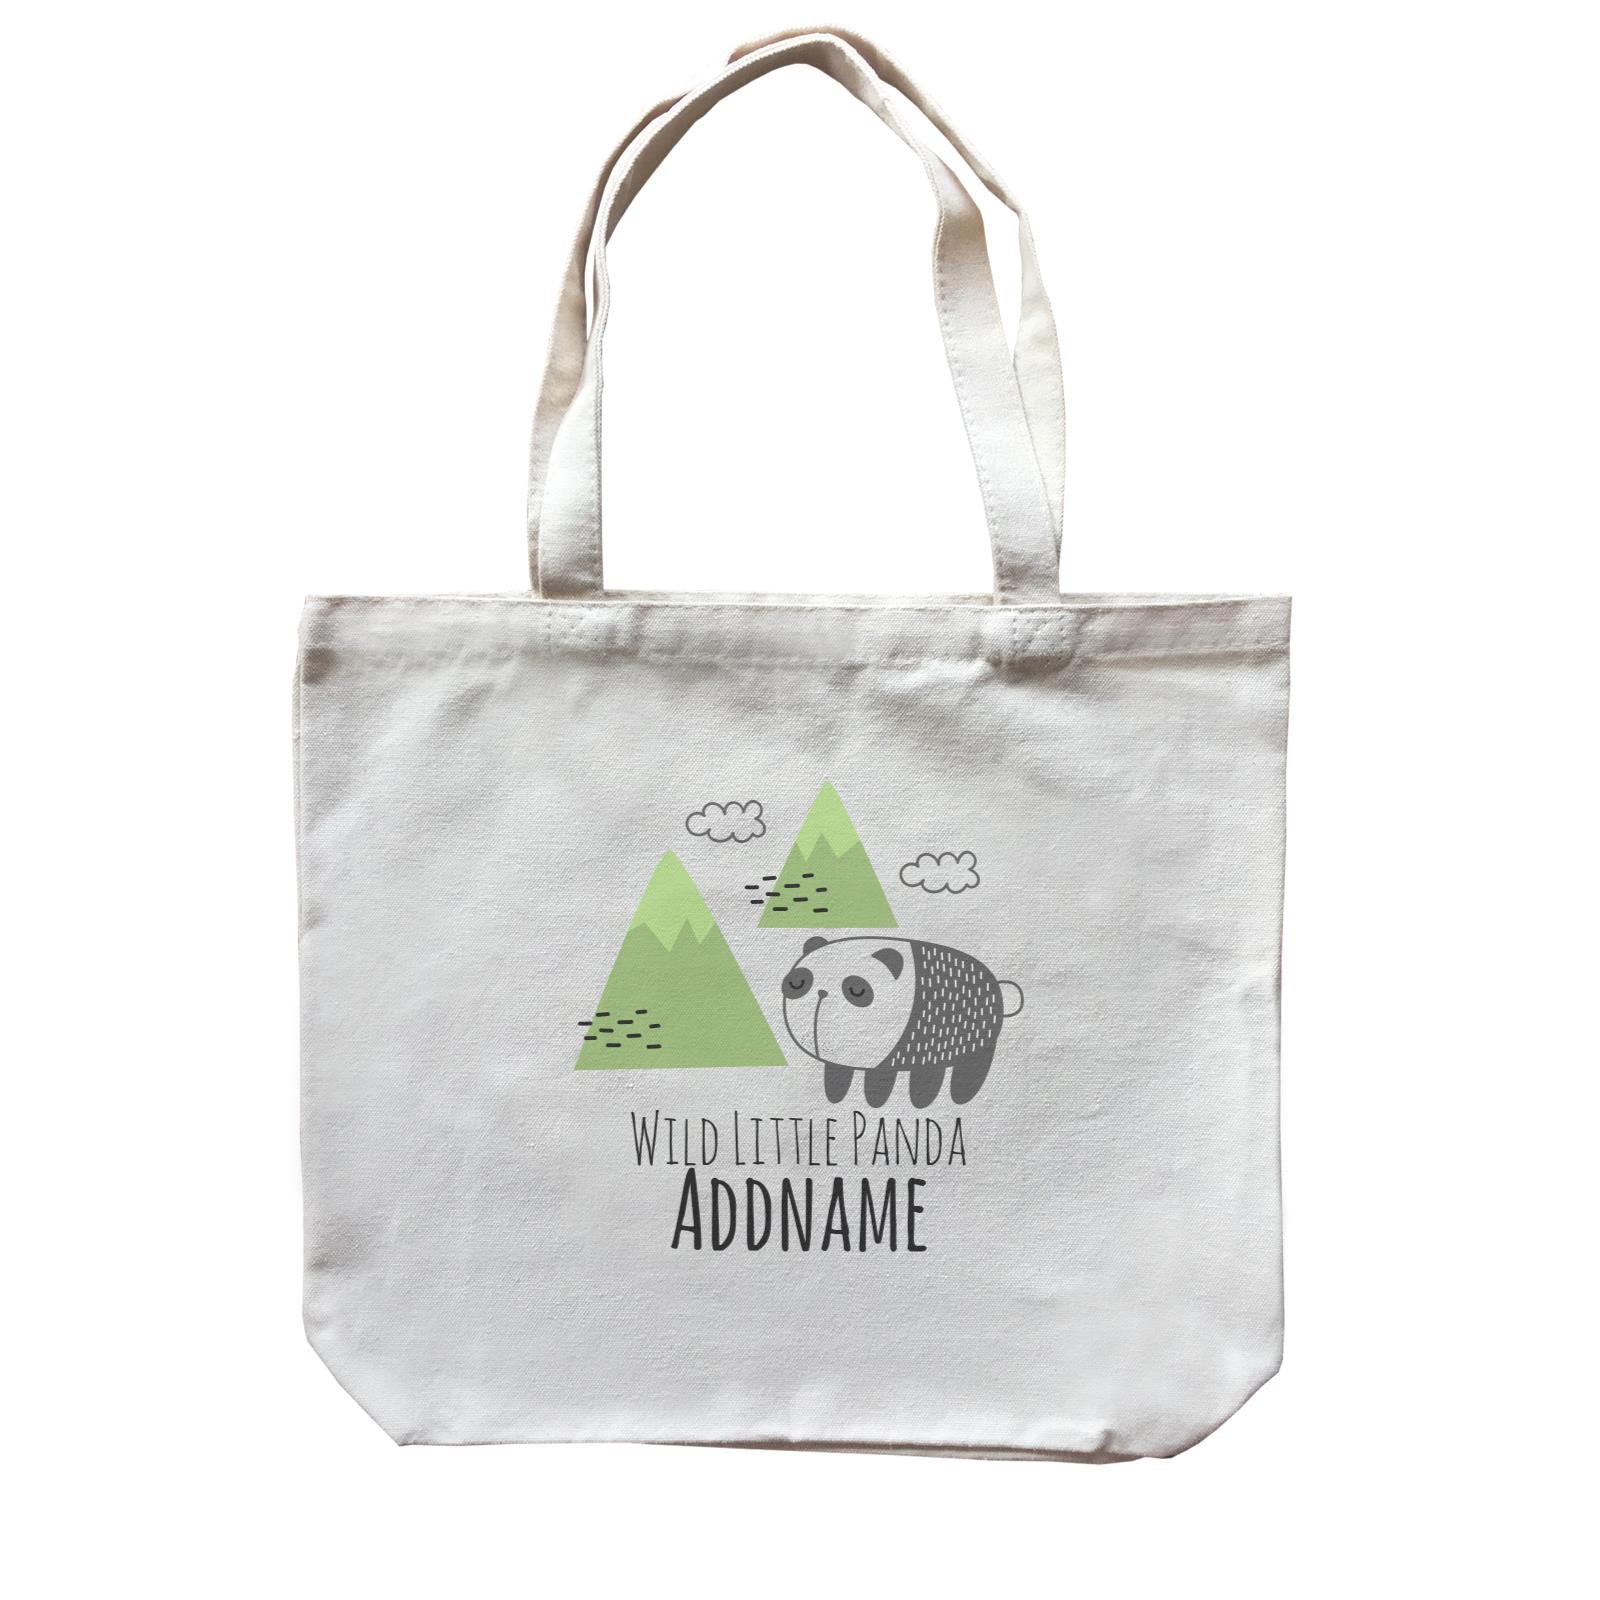 Drawn Adorable Animals Wild Little Panda Addname Canvas Bag